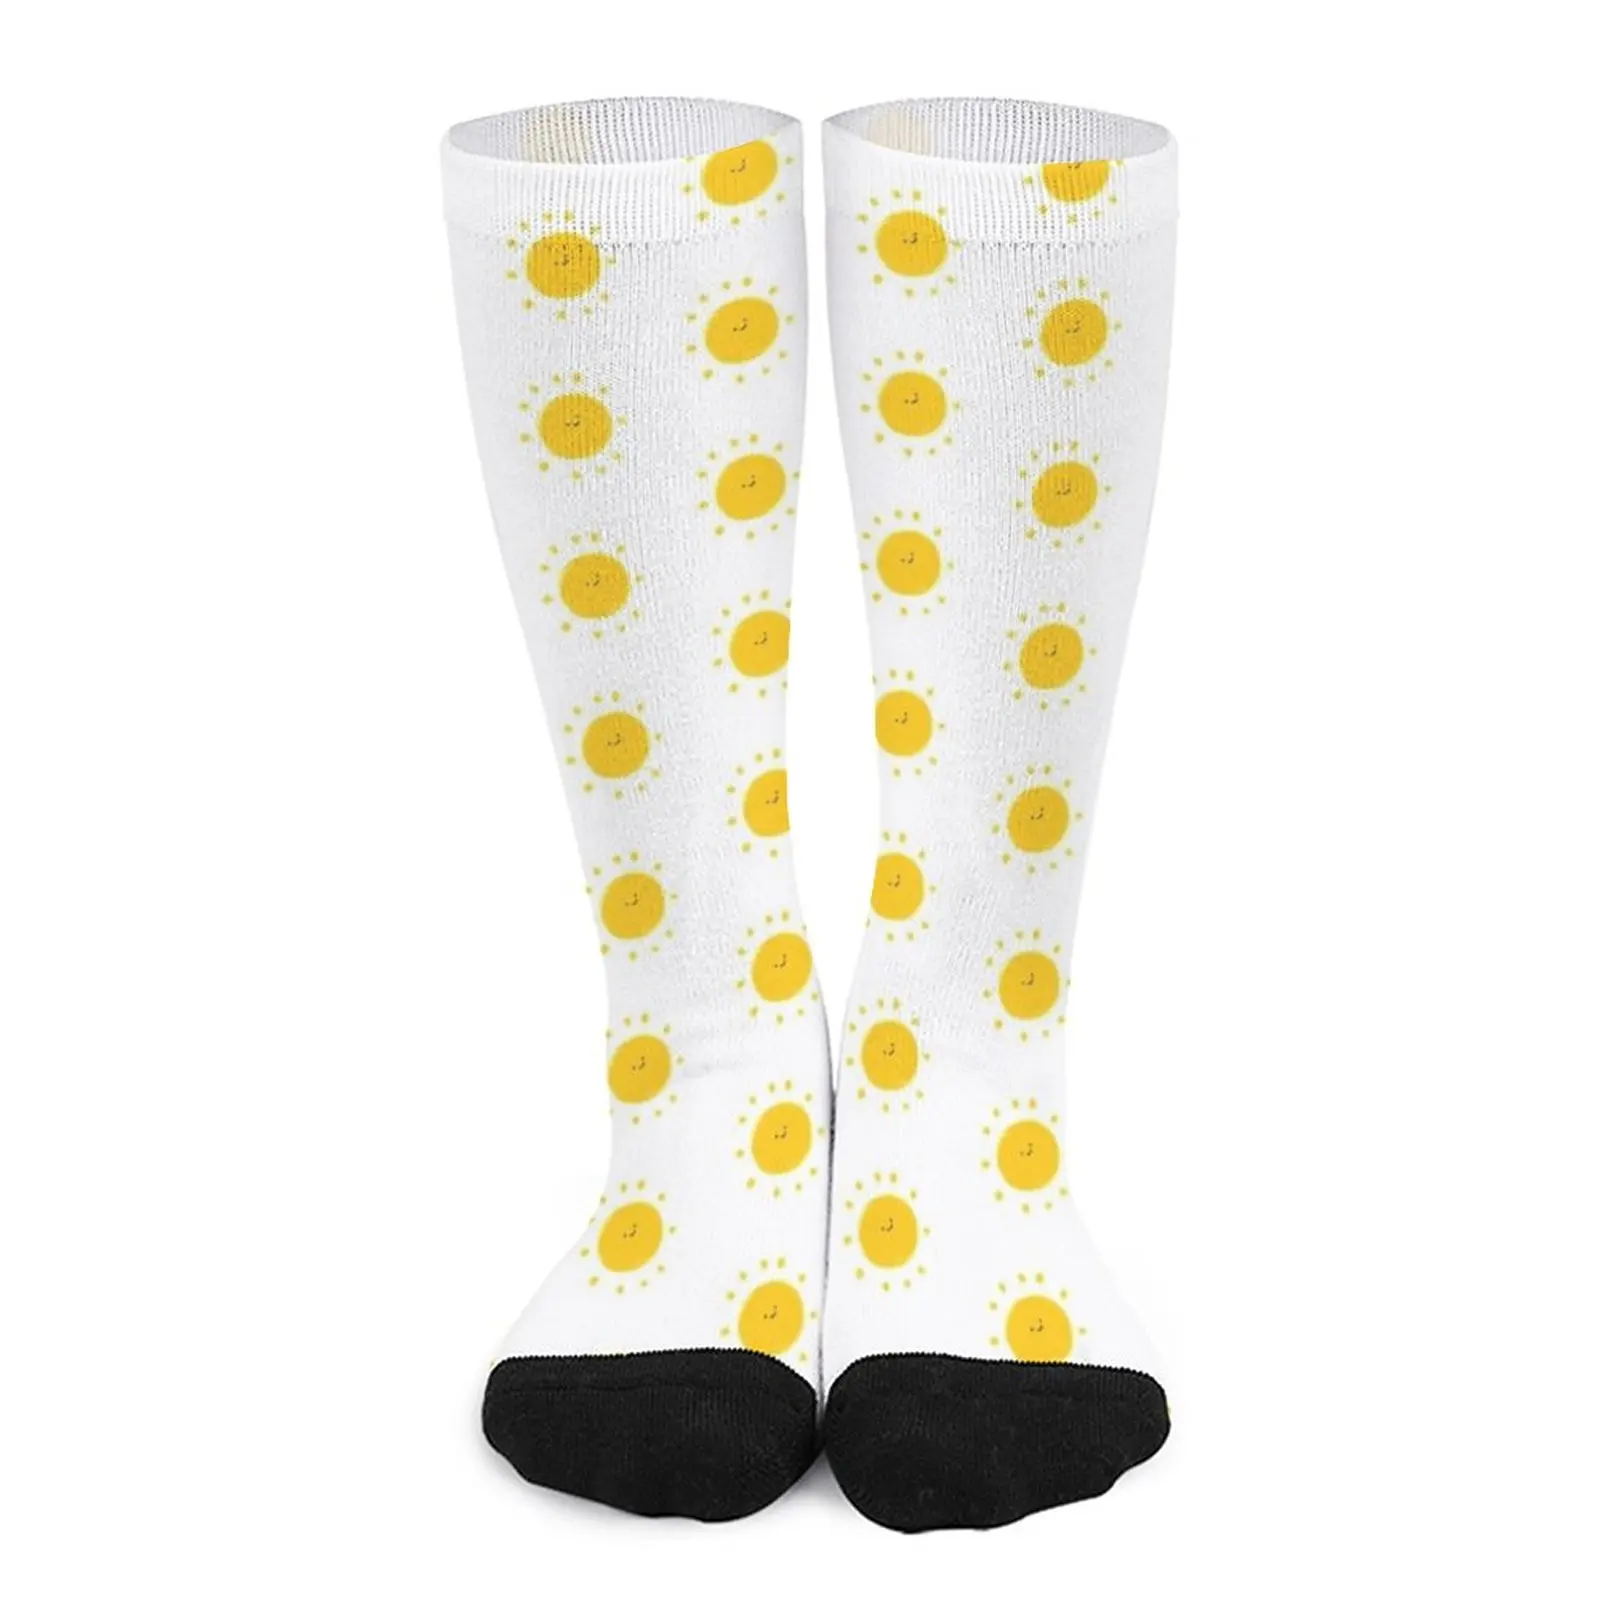 Mr. Sunshine Socks Woman socks socks aesthetic compression socks men